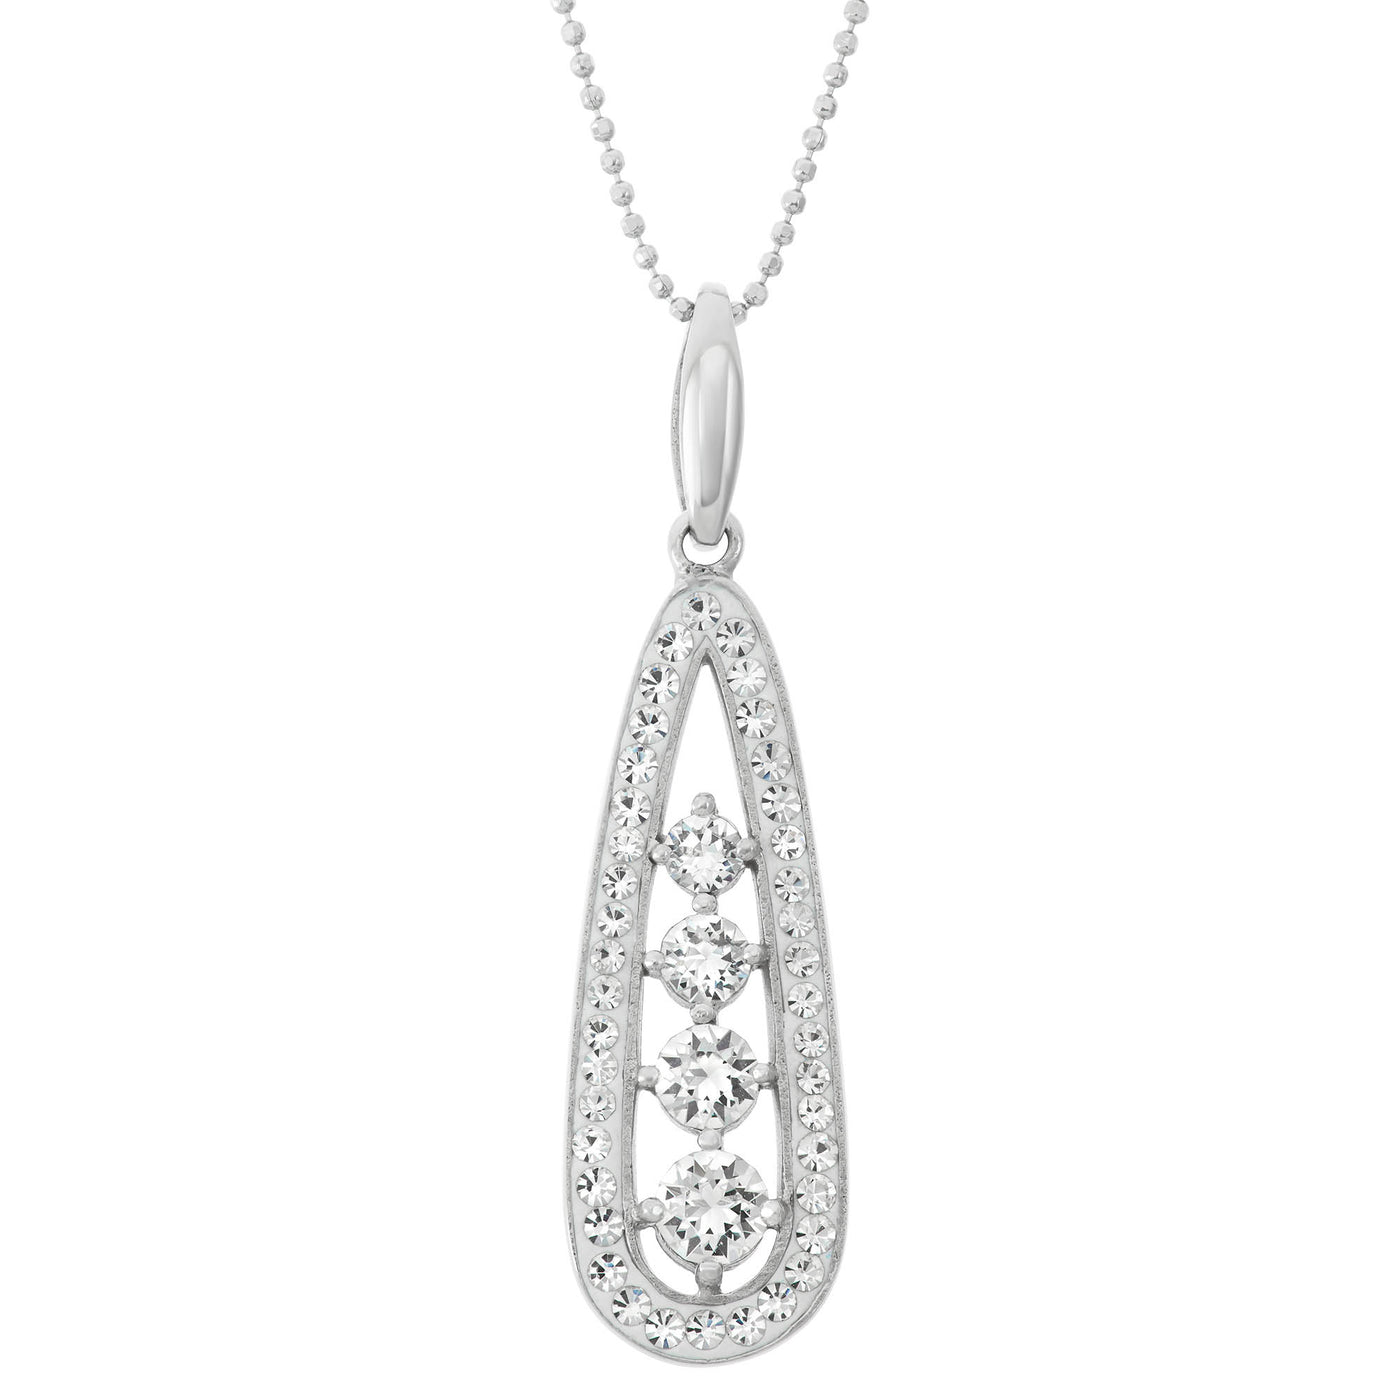 Rebecca Sloane Silver Pendant With White Crystal